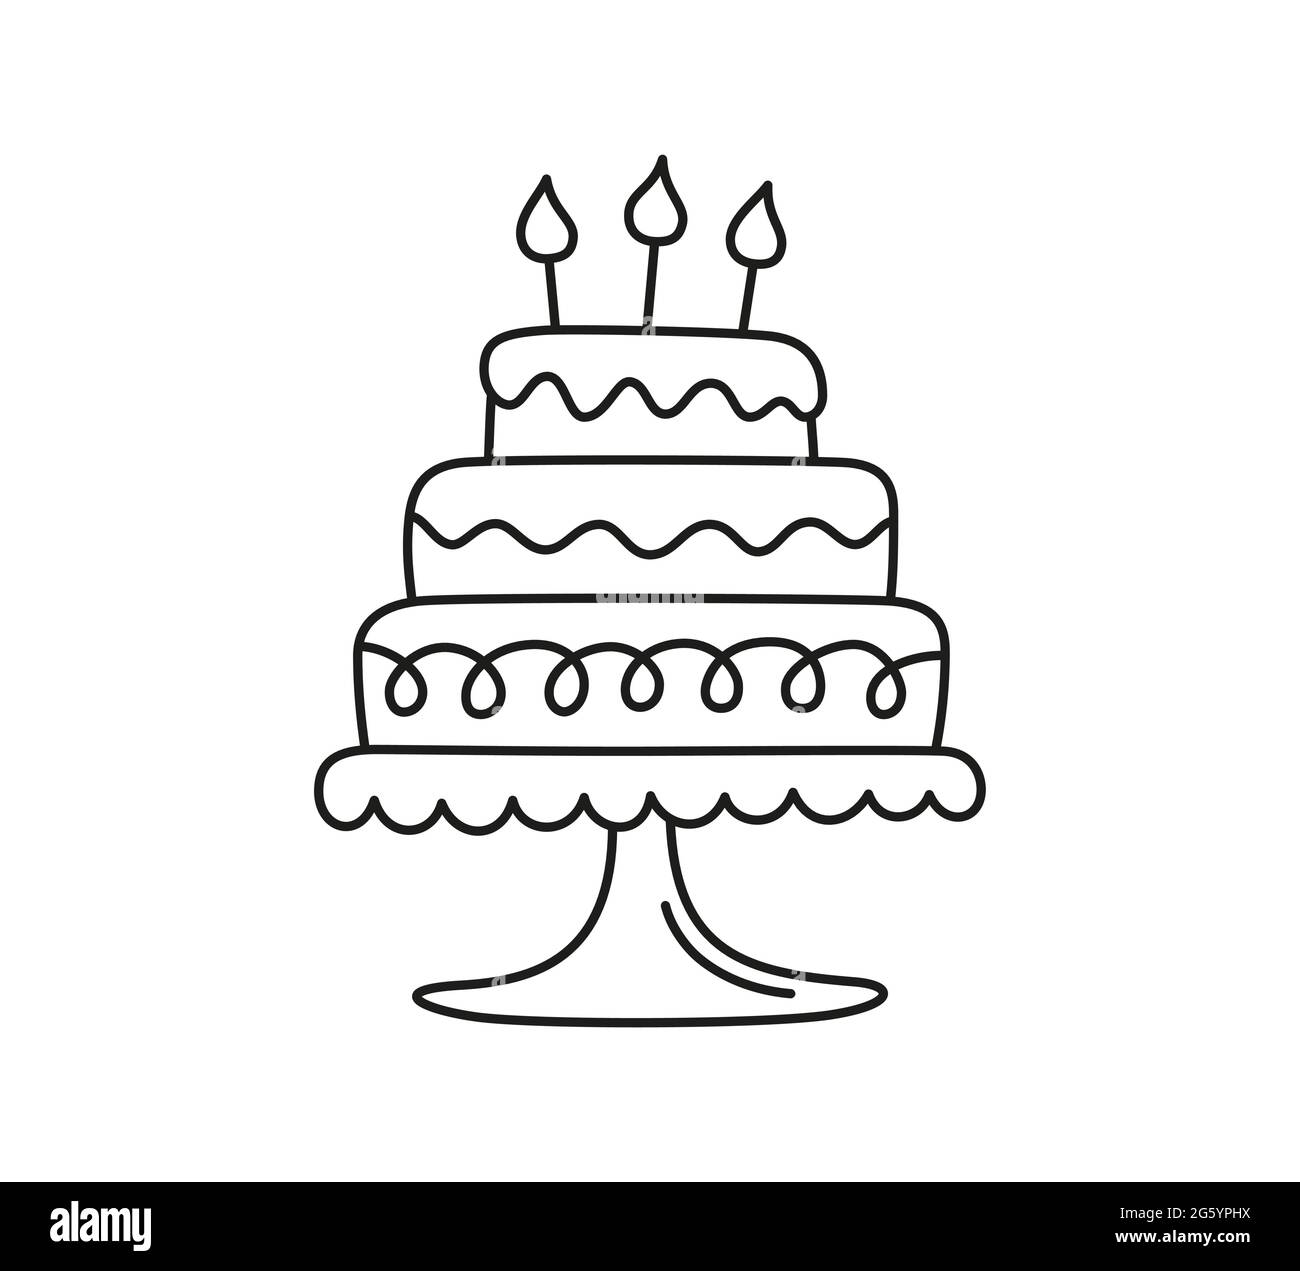 Birthday Cake - Free to Use Zarya - Illustrations ART street-saigonsouth.com.vn